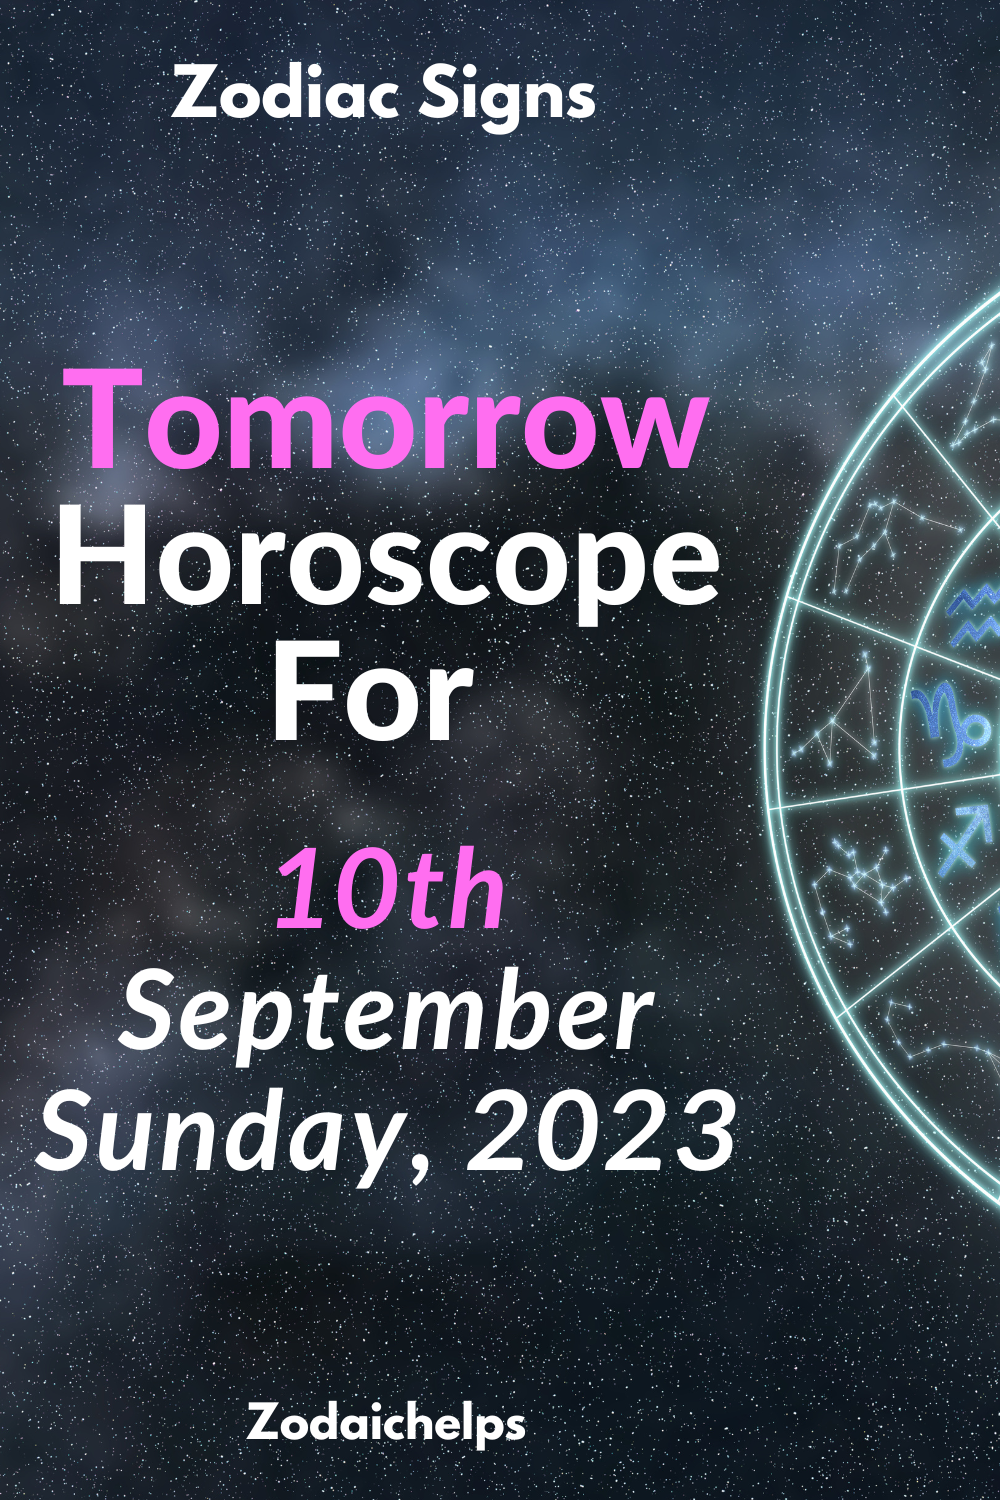 Tomorrow Horoscope for 10th September Sunday, 2023